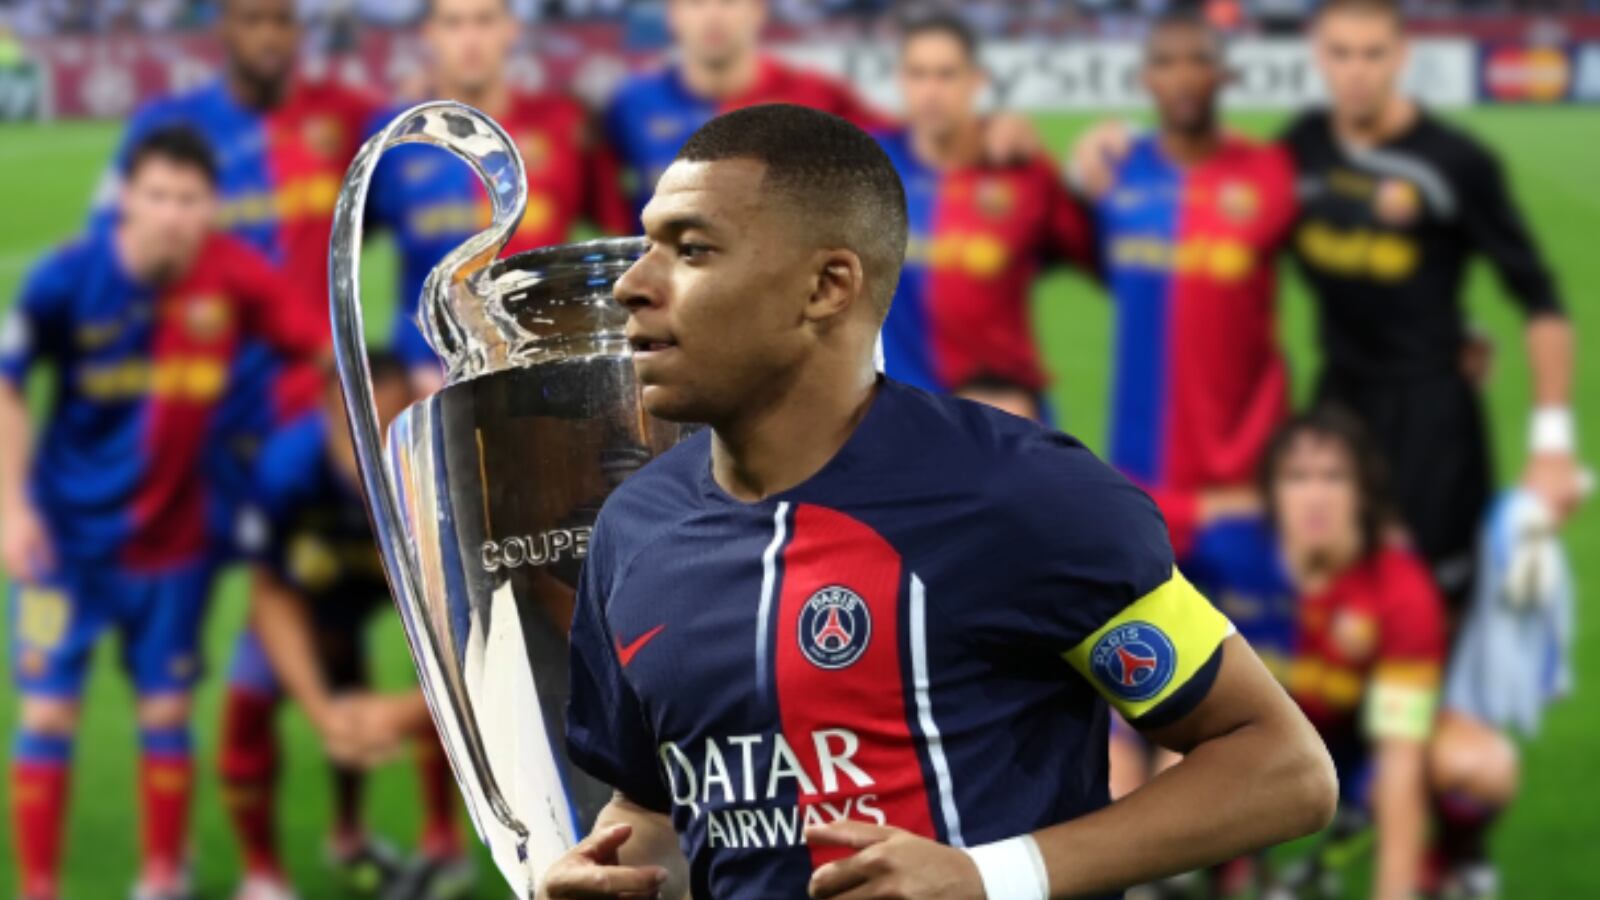 Ganó un triplete con el Barça y destrozó al Madrid, ahora le hizo un pedido a Mbappé